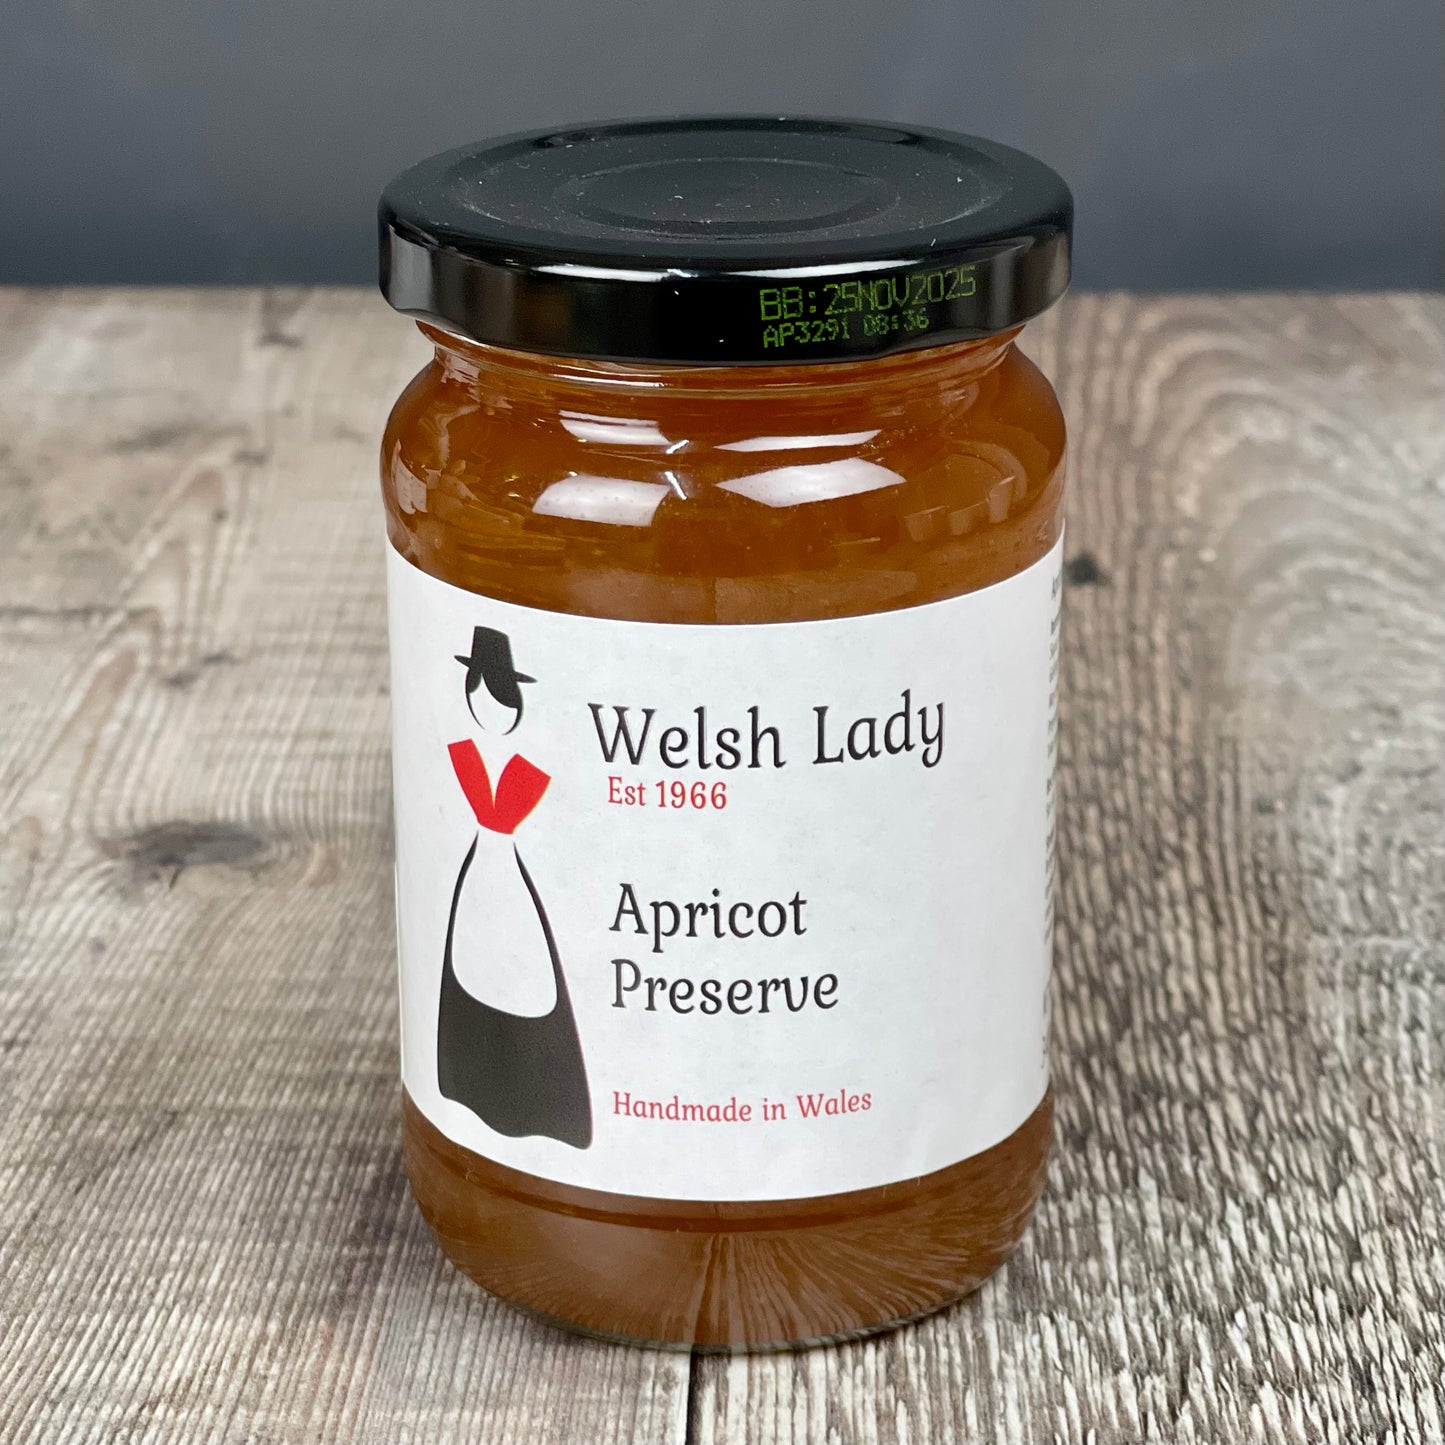 Apricot Preserve by Welsh Lady Preserves